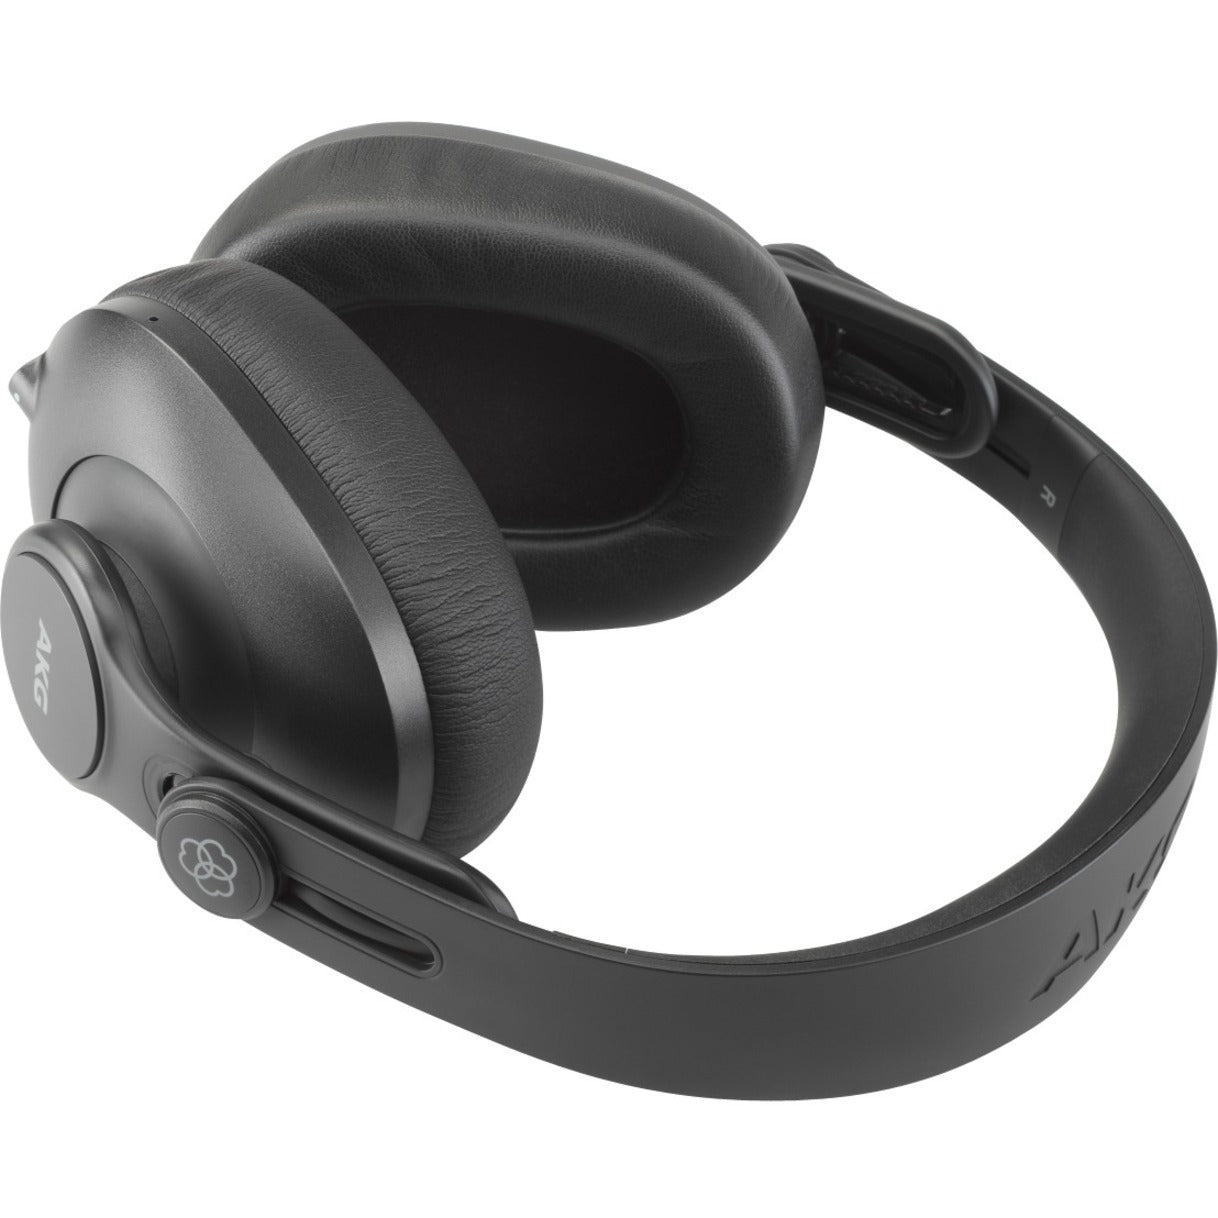 AKG K361-BT Over-Ear Studio Headphones with Bluetooth, Foldable, Black